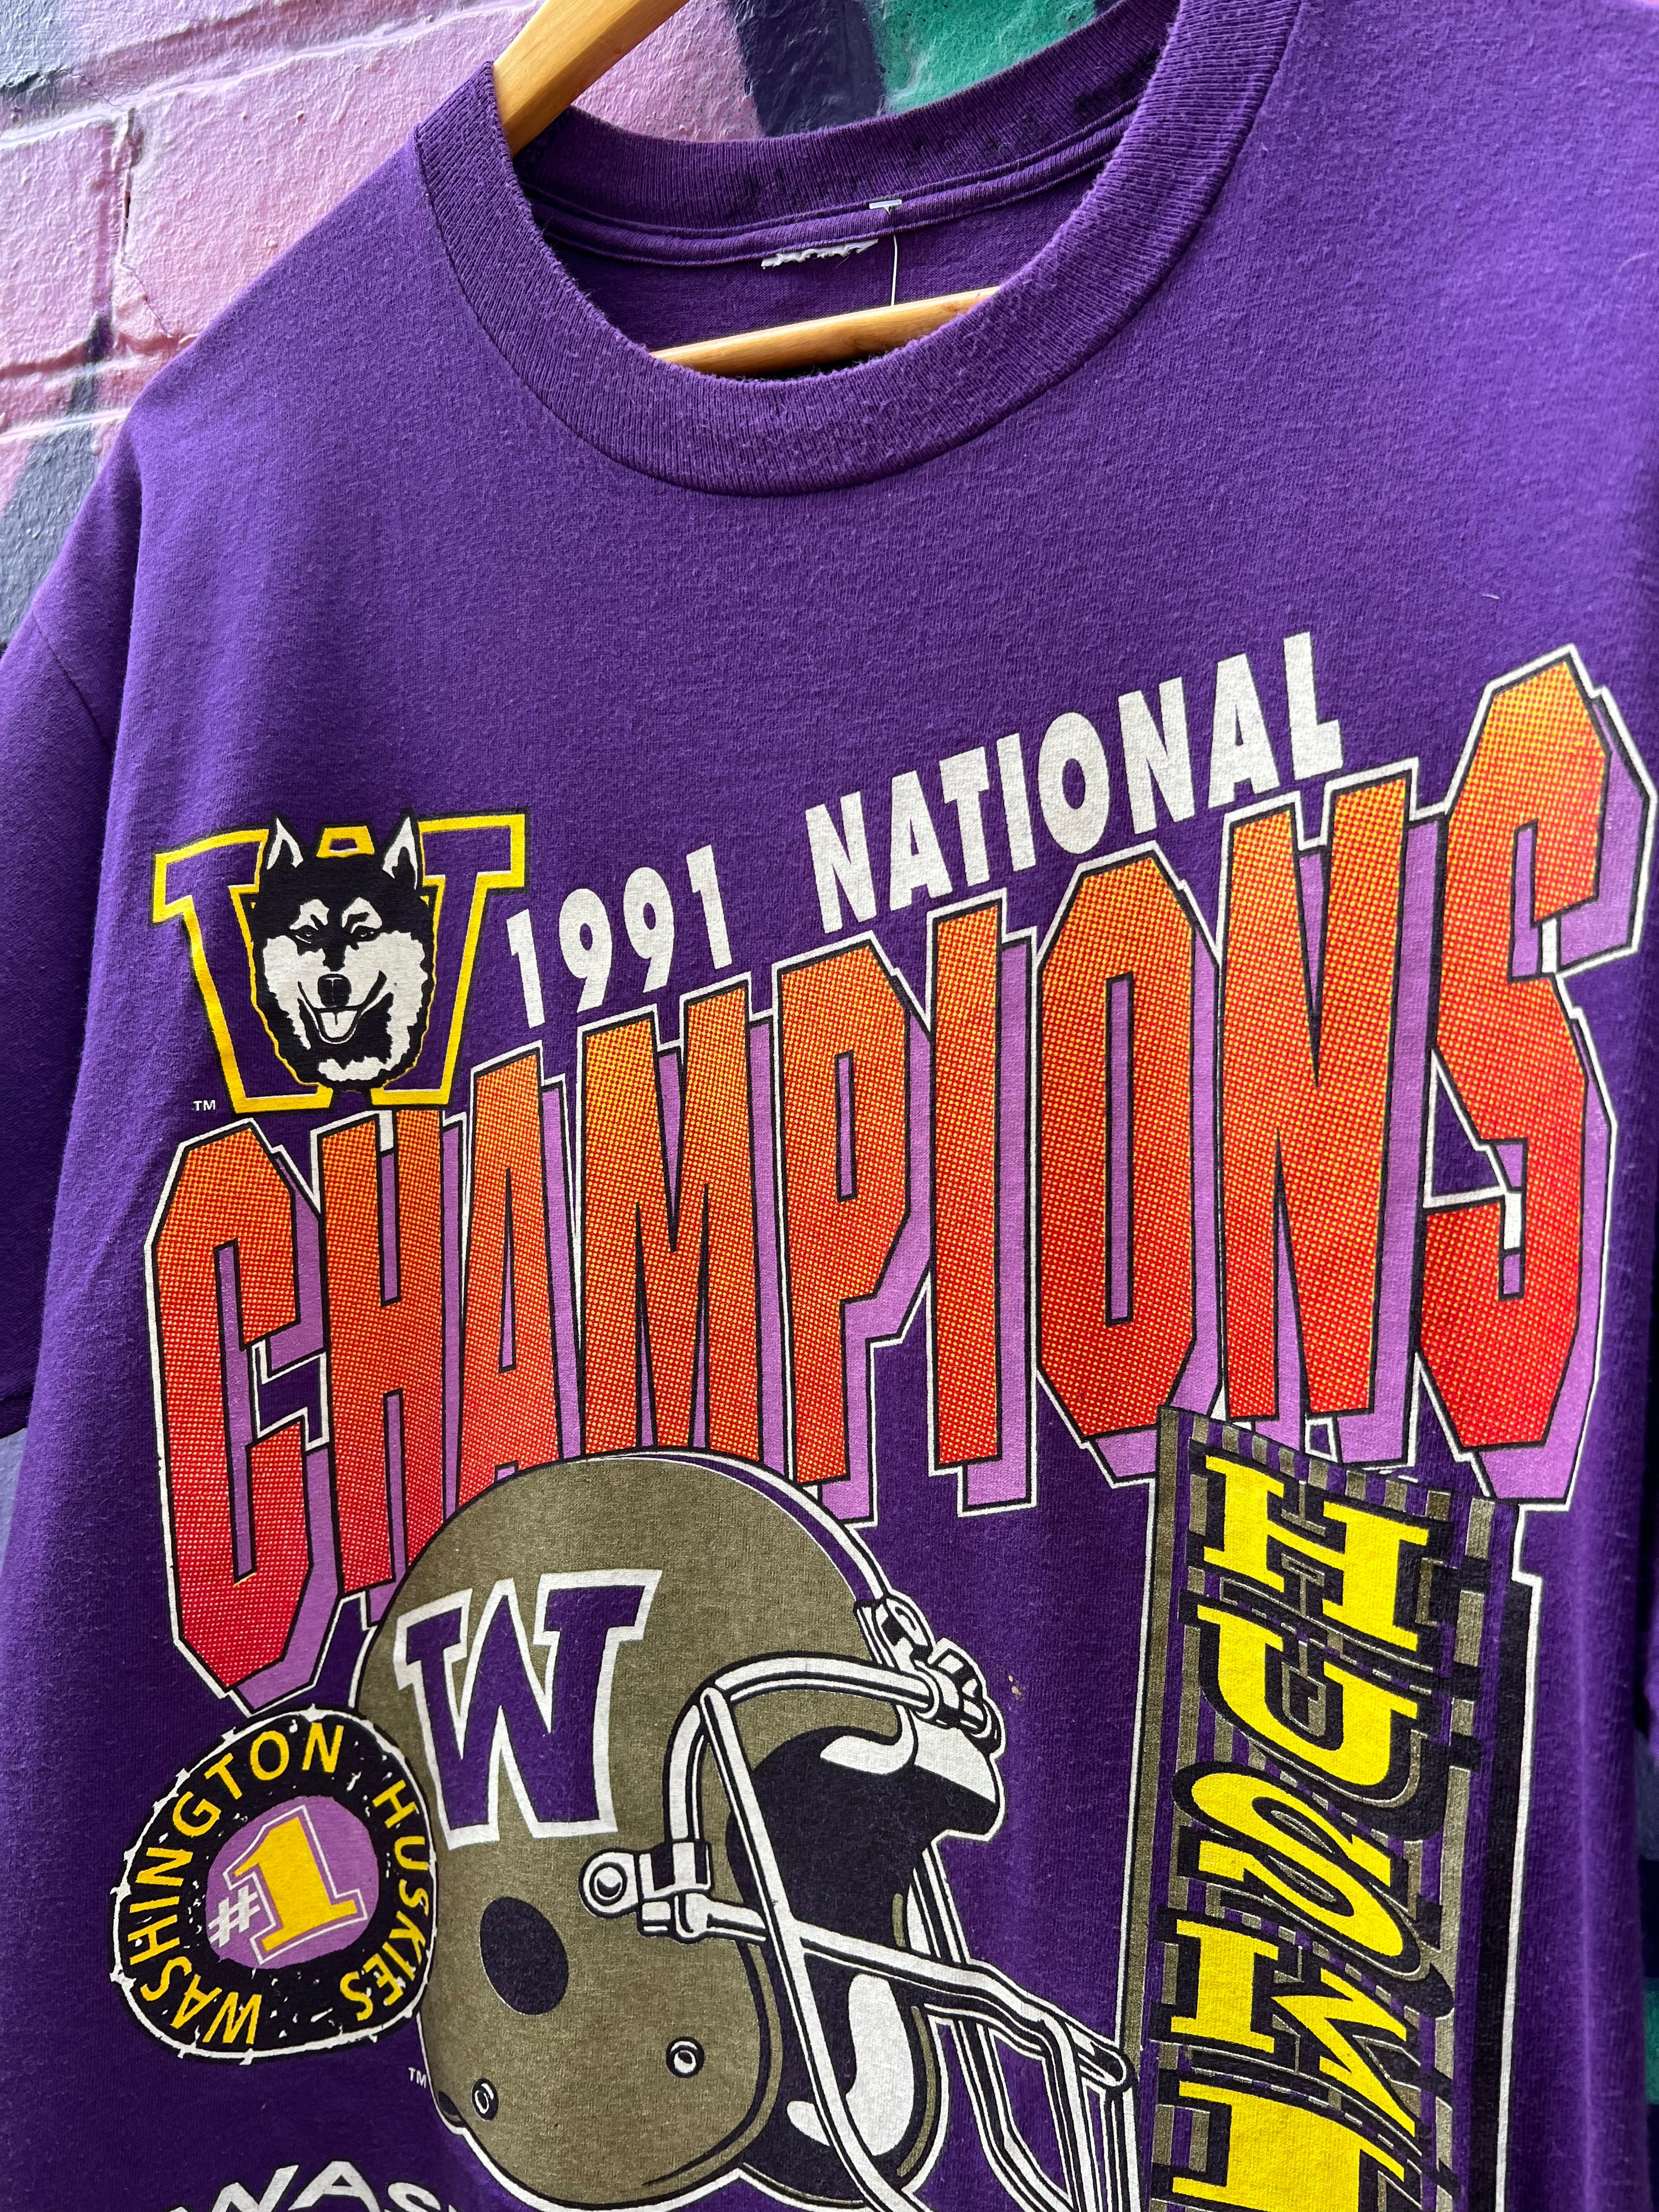 L - 1991 Washington Huskies National Champions